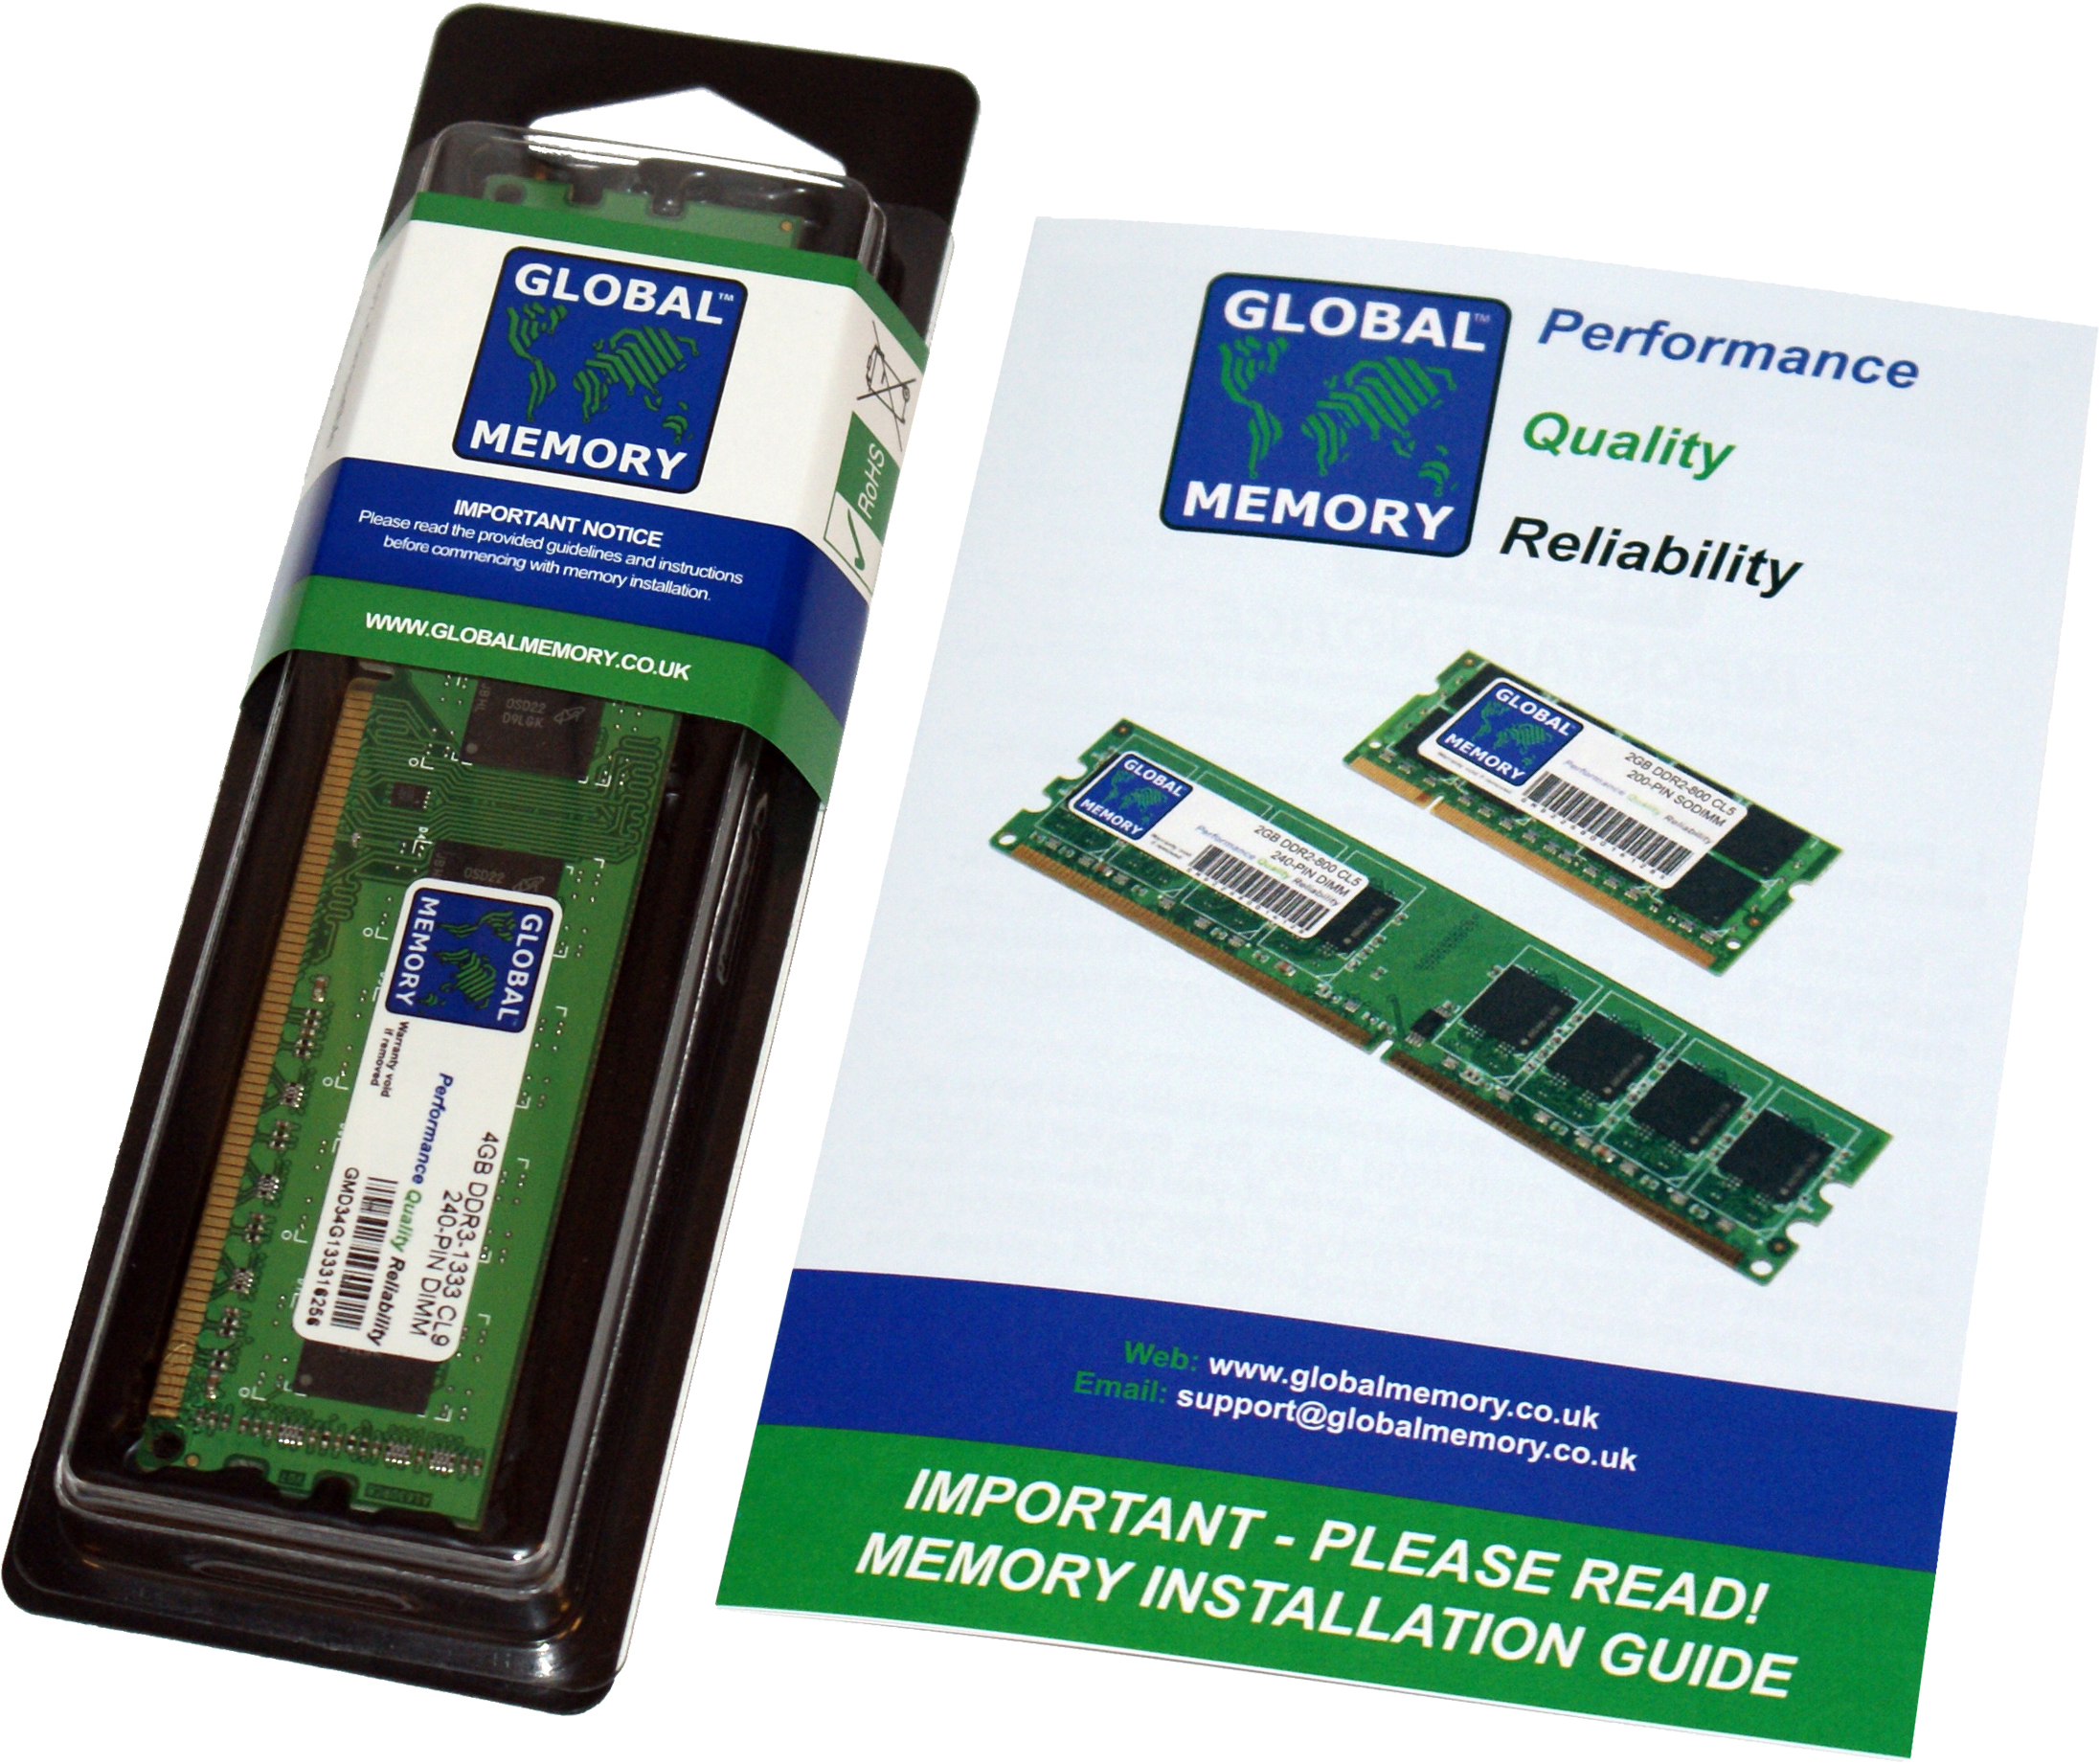 4GB DDR4 2133MHz PC4-17000 288-PIN DIMM MEMORY RAM FOR HEWLETT-PACKARD PC DESKTOPS